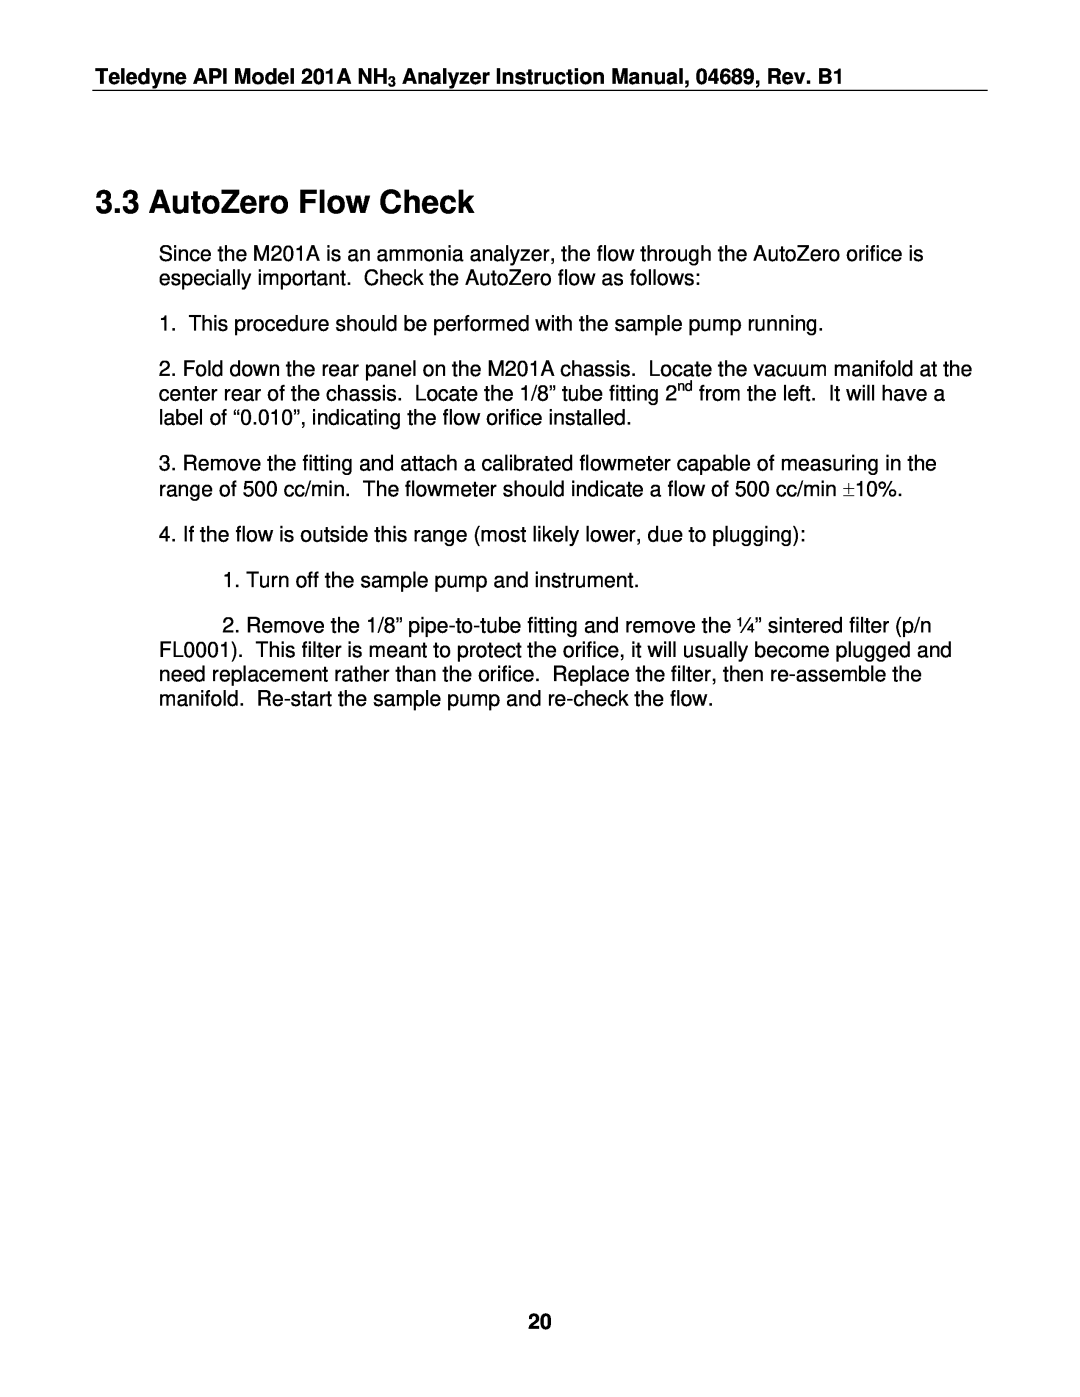 Teledyne 201A manual AutoZero Flow Check 